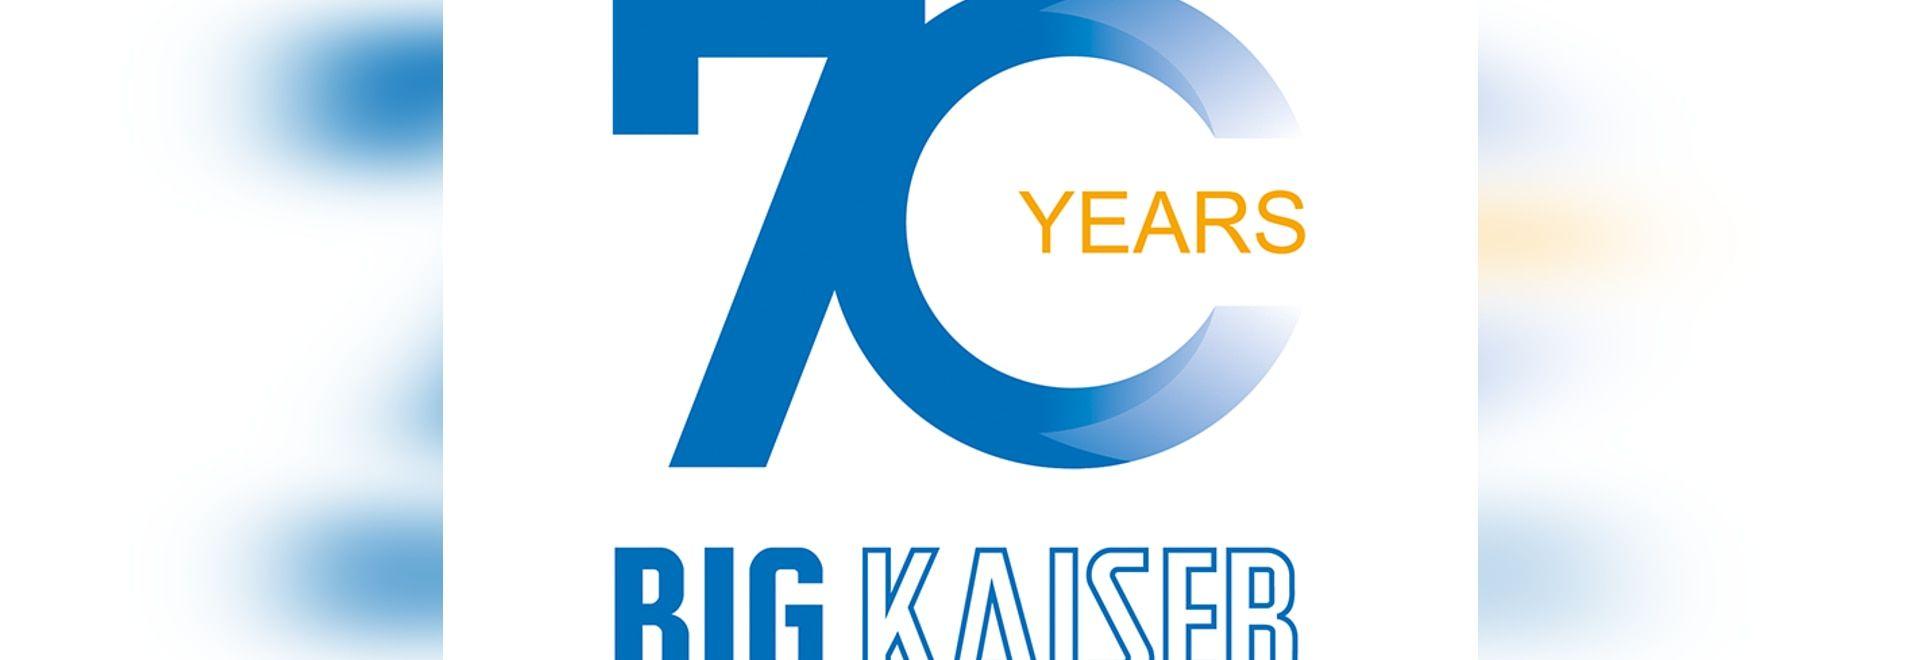 Big Kaiser Logo - BIG KAISER Precision Tooling celebrates 70 years